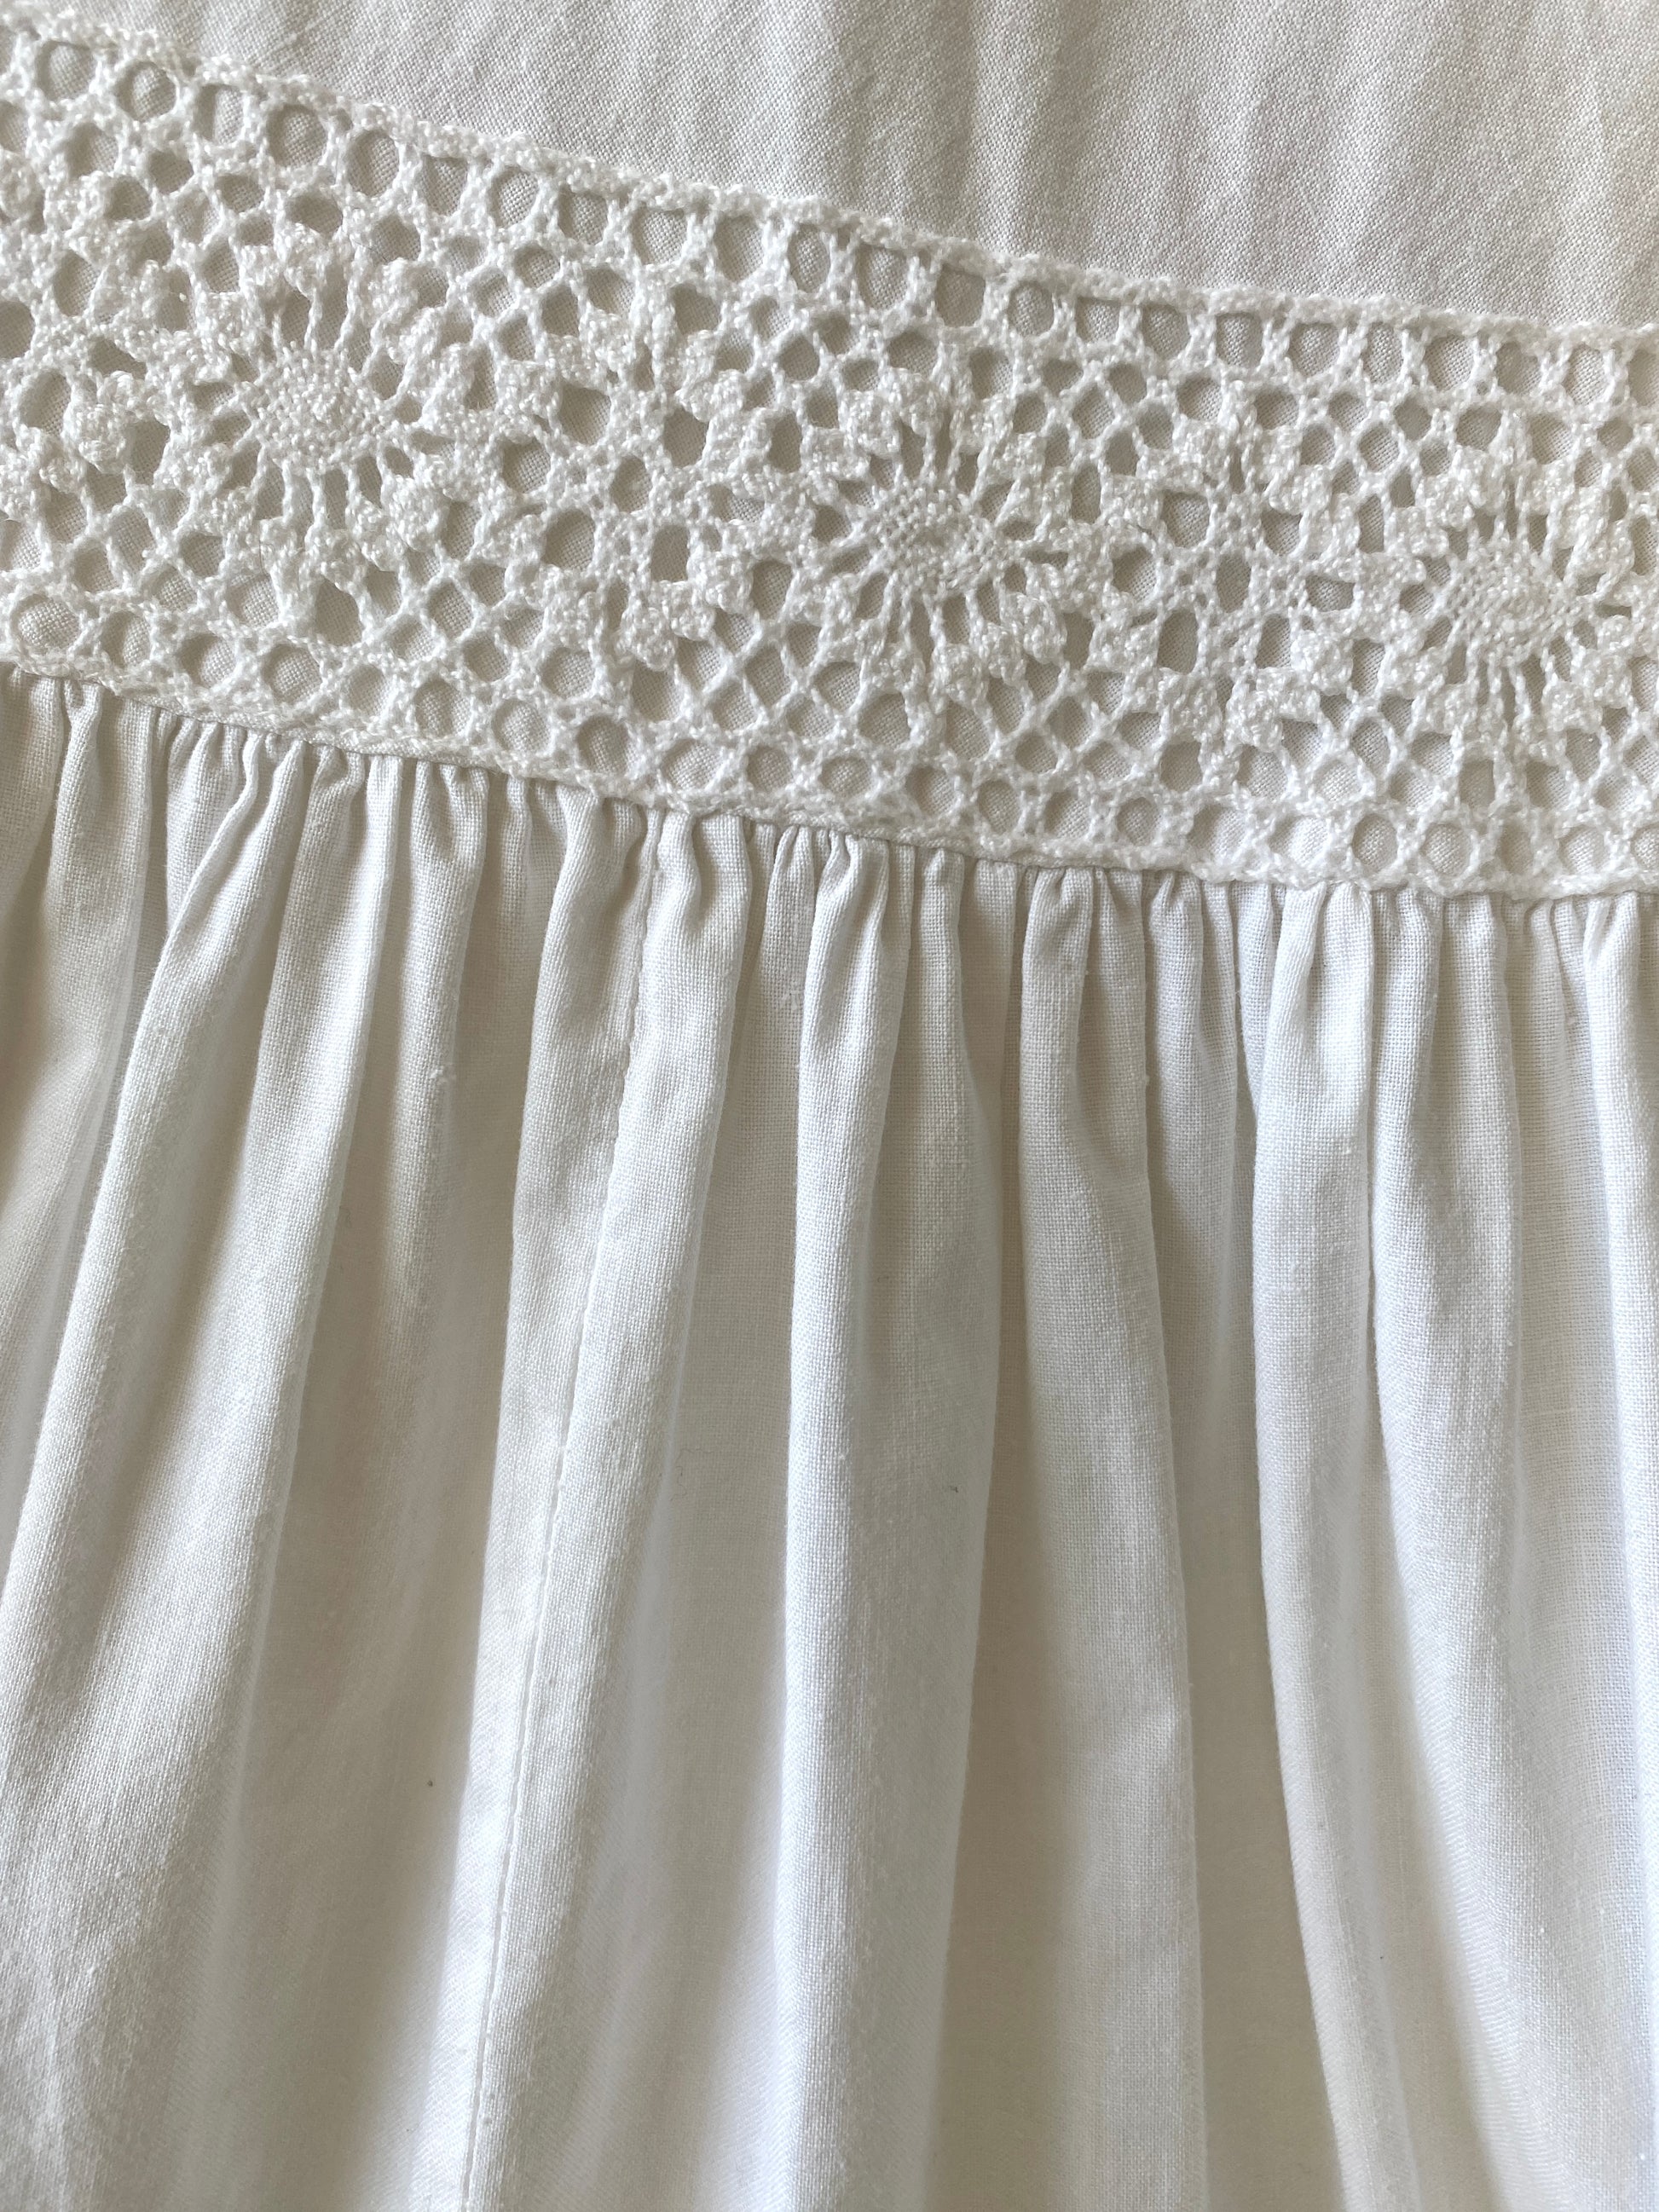 Vintage 1970s White Cotton Crochet Laura Ashley Maxi Dress, XS